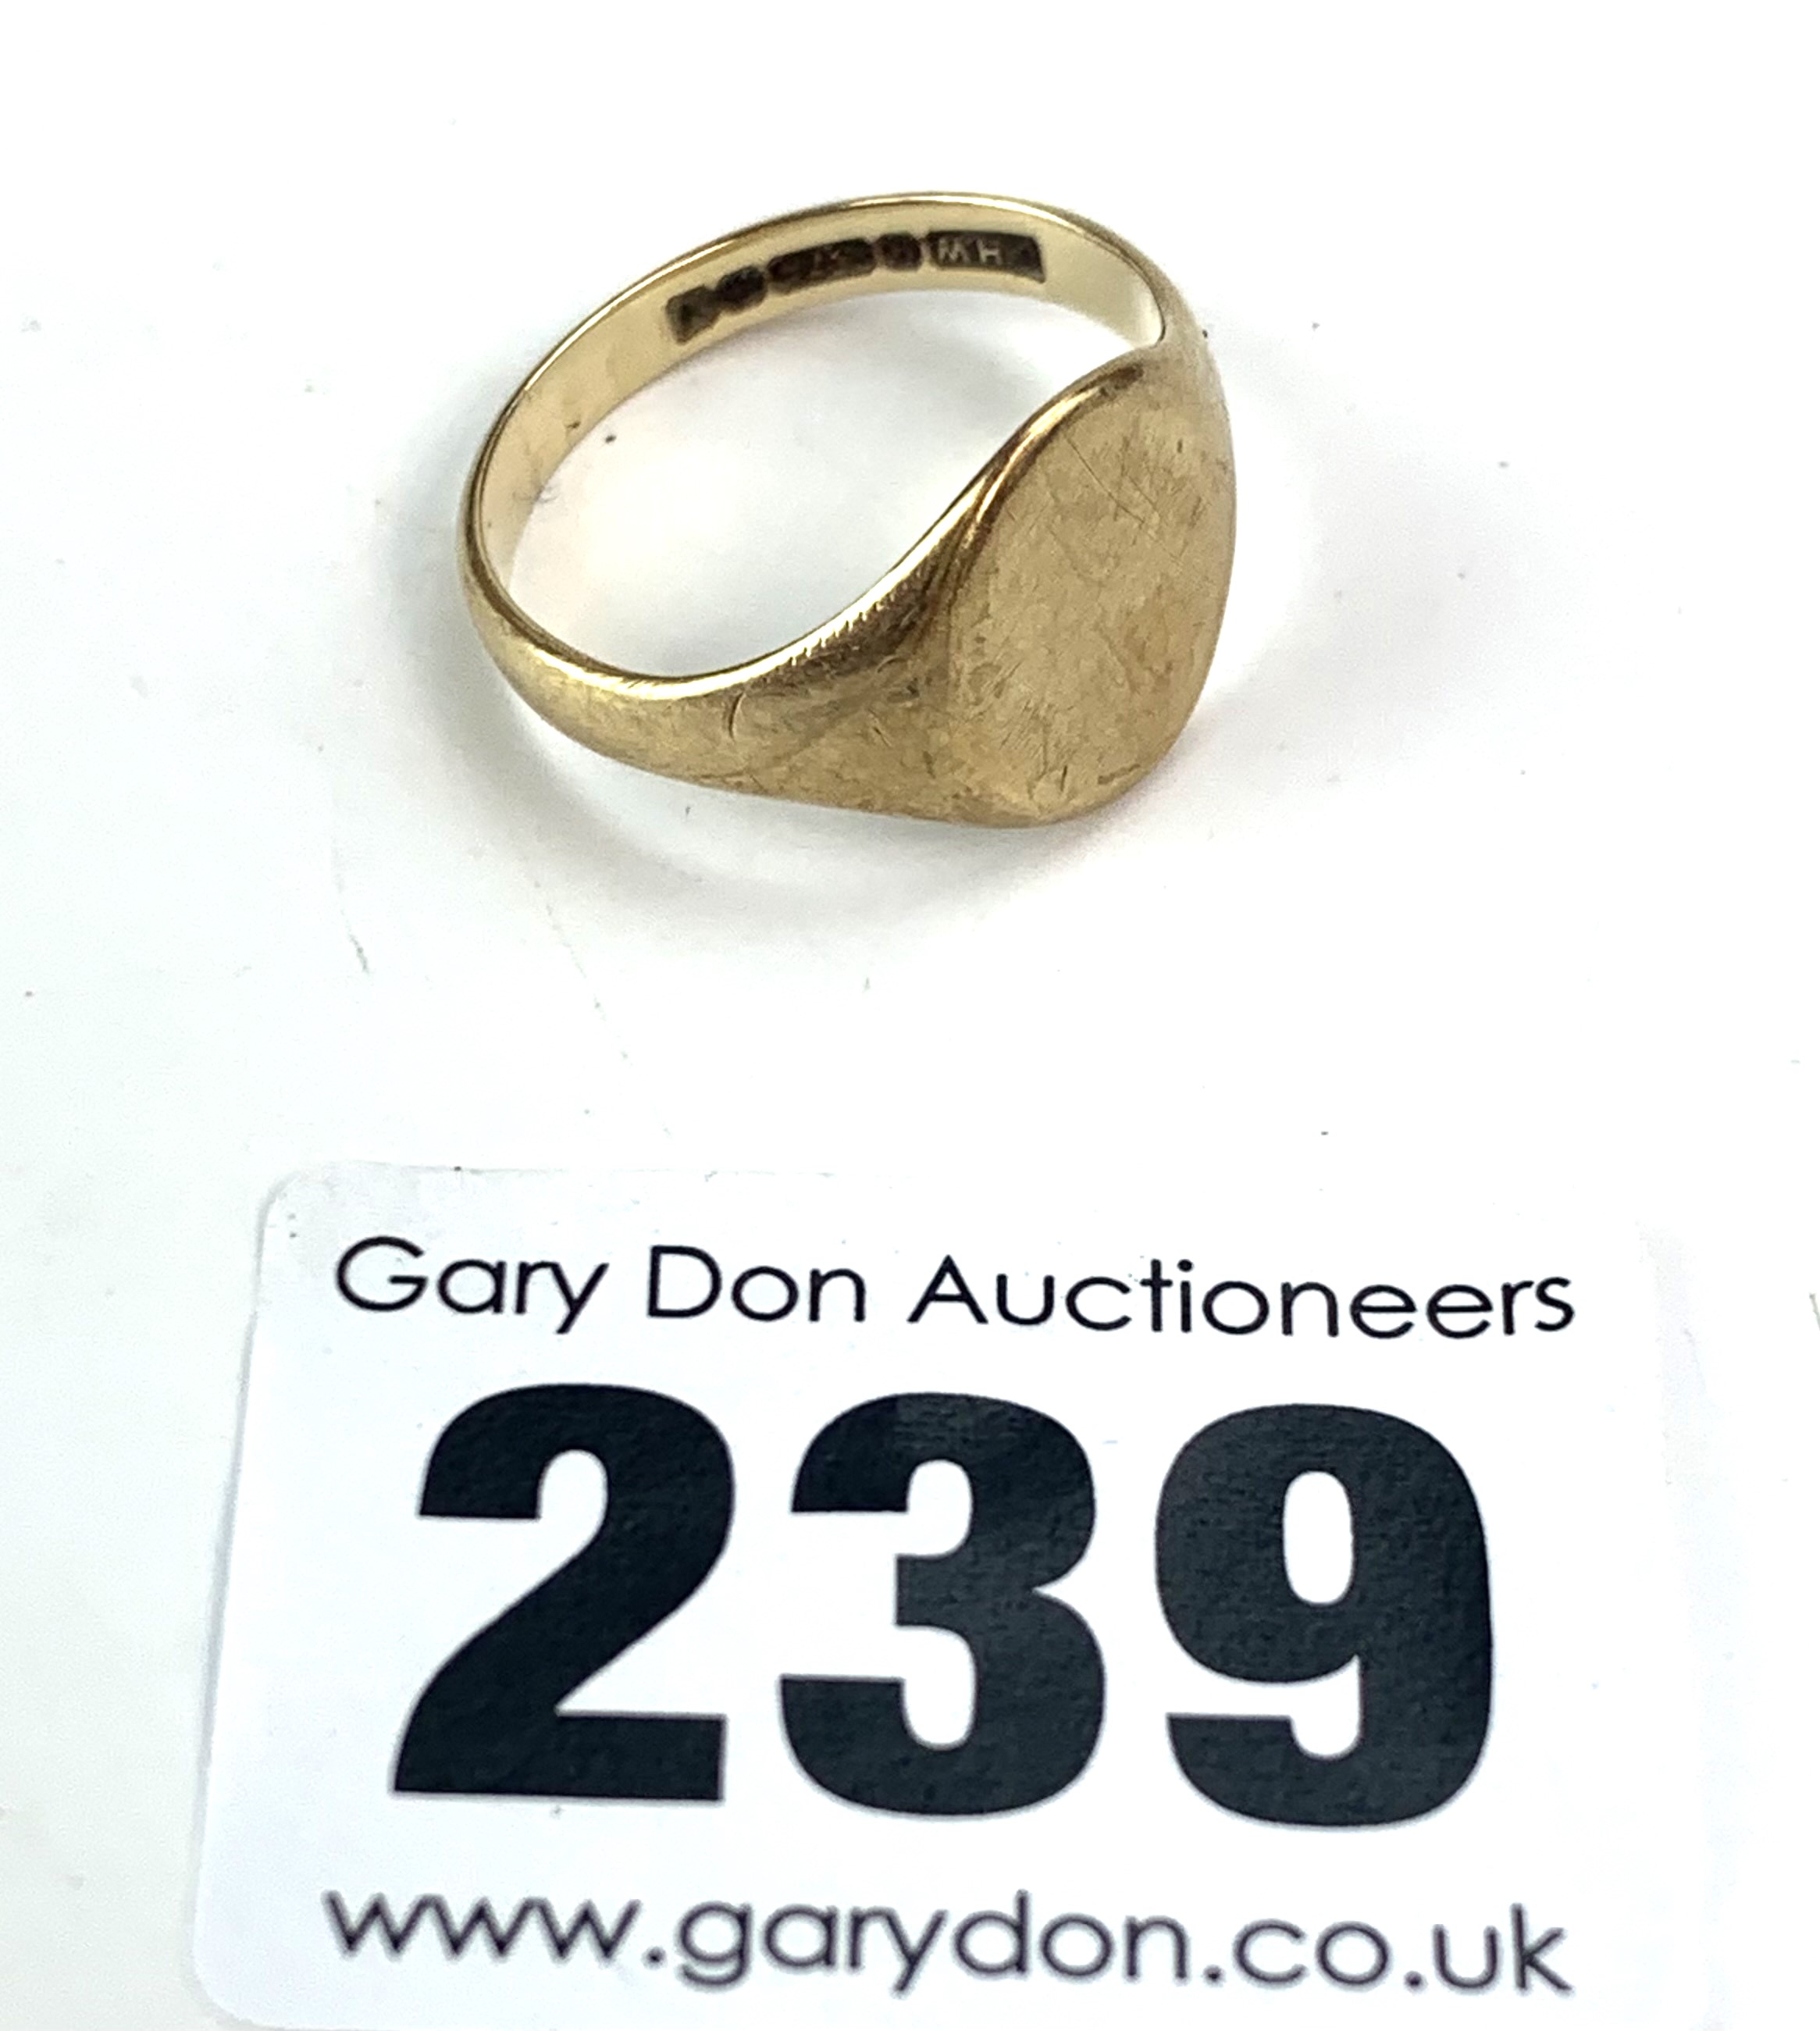 9k gold signet ring - Image 3 of 4